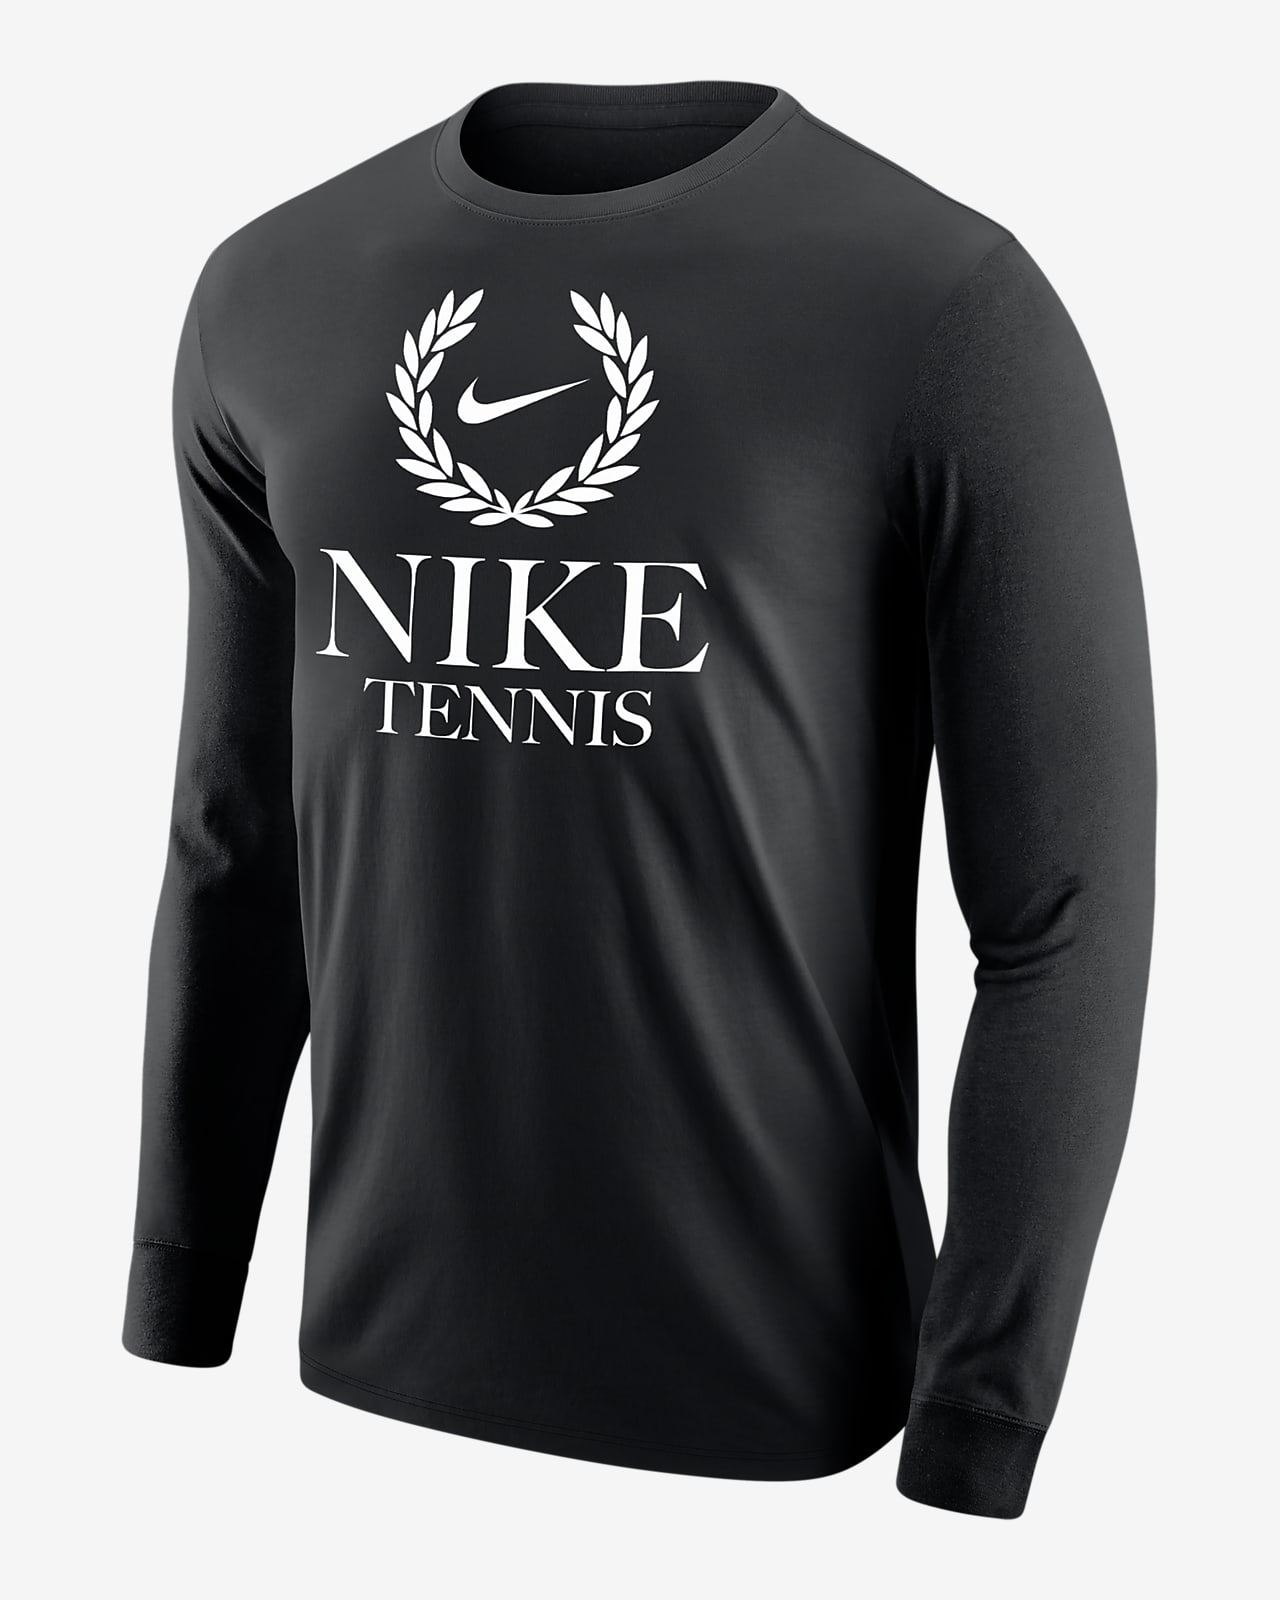 Playera para hombre Nike Tennis